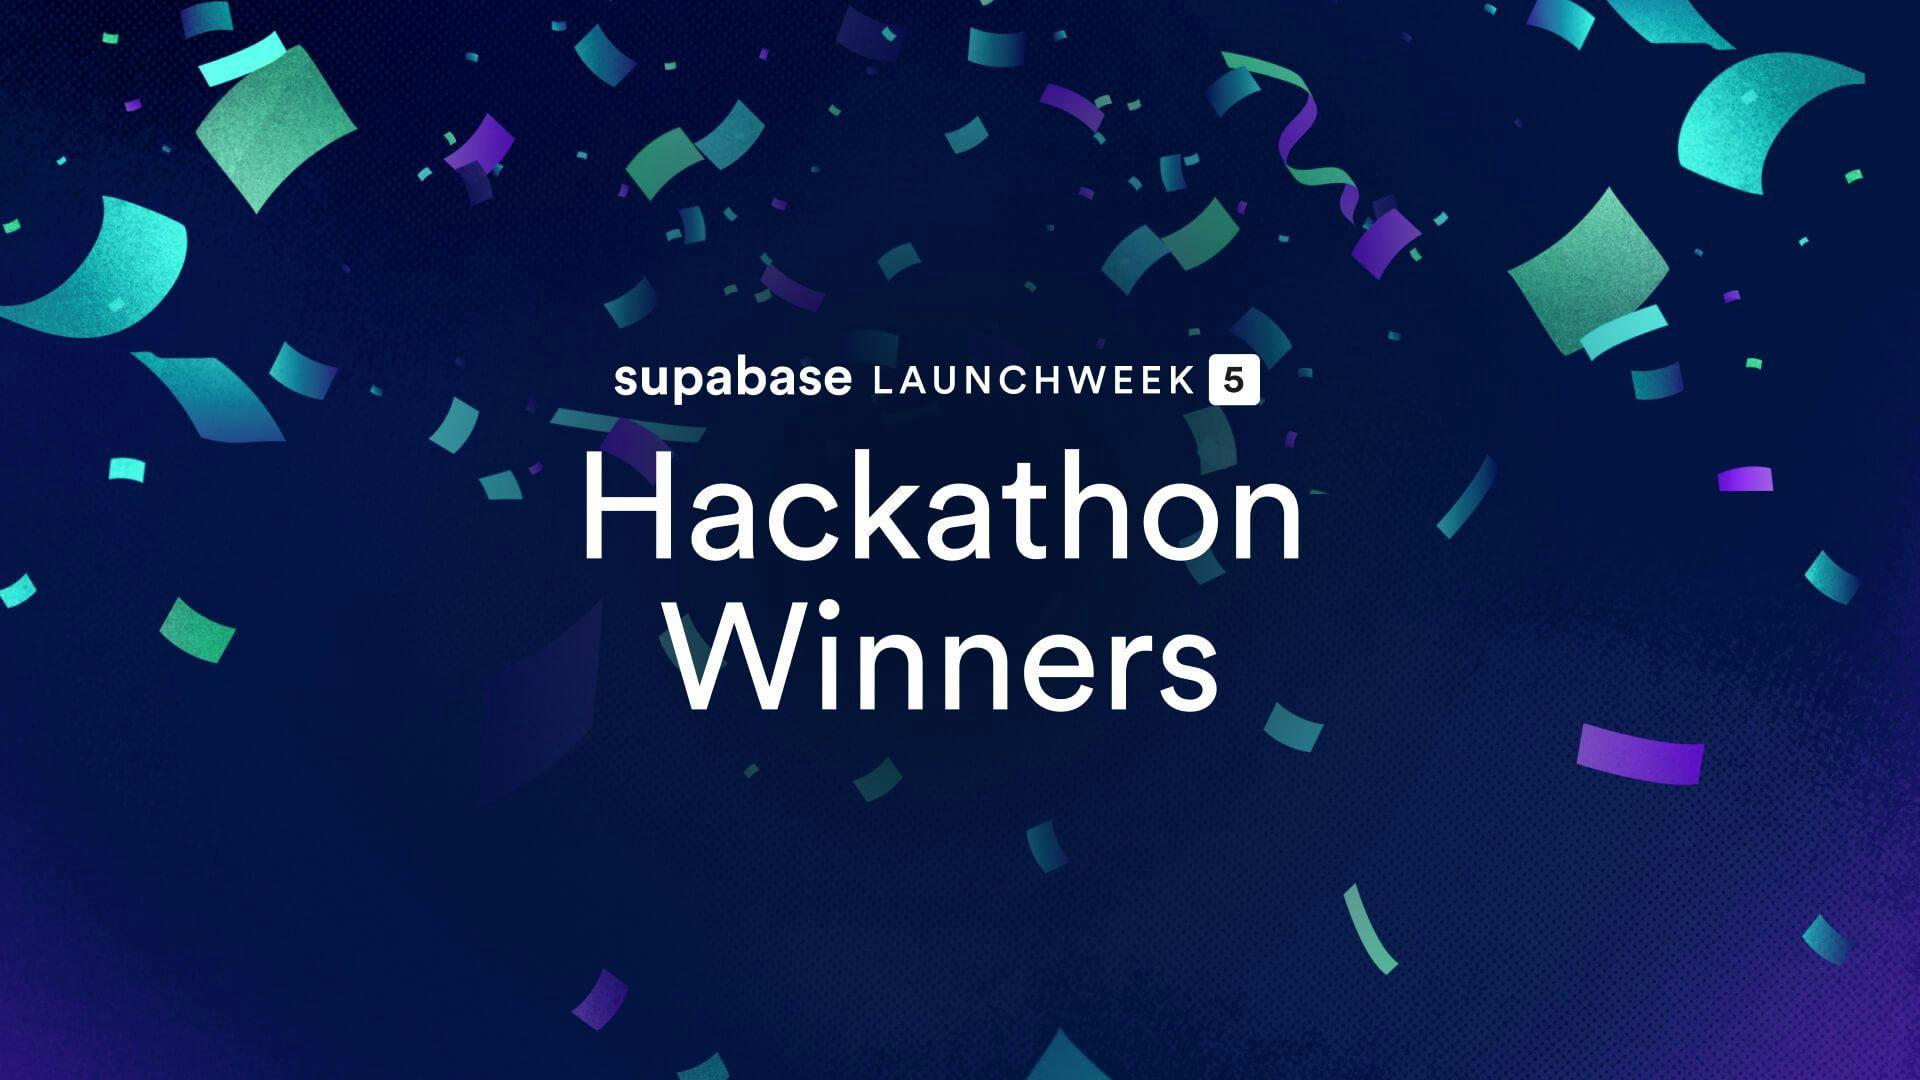 Launch Week 5 Hackathon Winners thumbnail